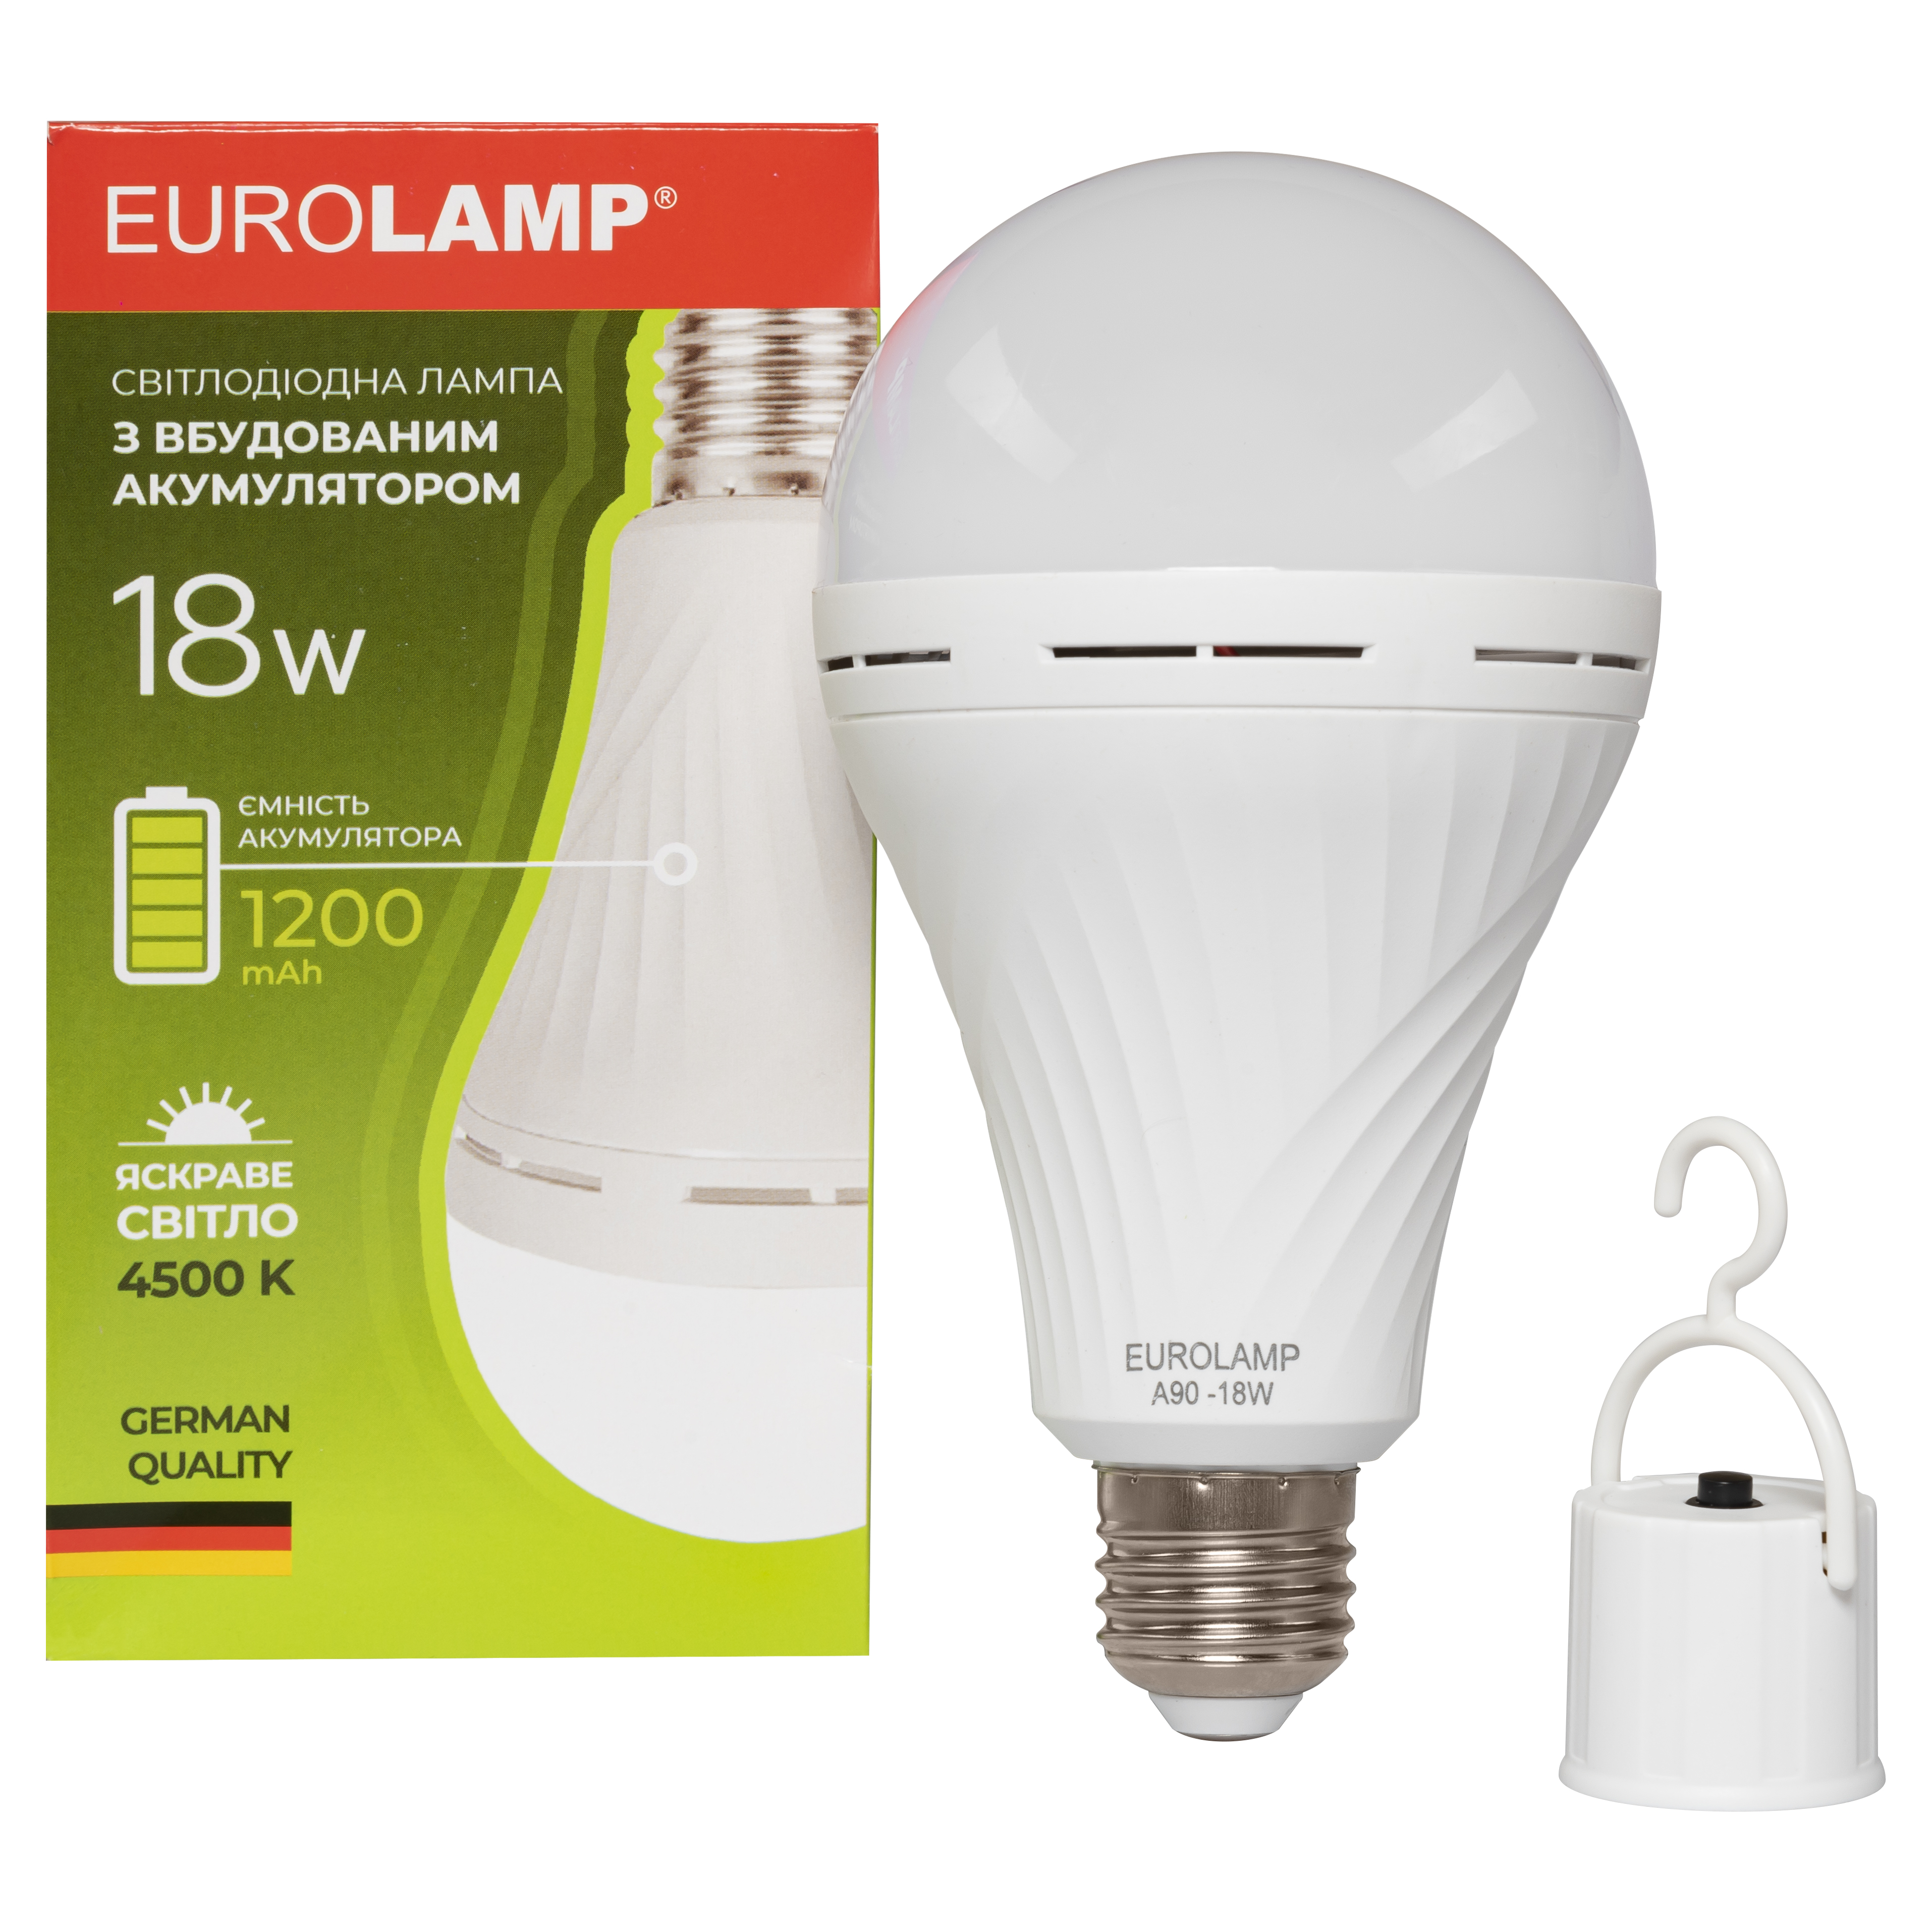 Цена китайская светодиодная лампа Eurolamp A90 18W 4500K 220V E27 (LED-A90-18274(EM)) в Киеве